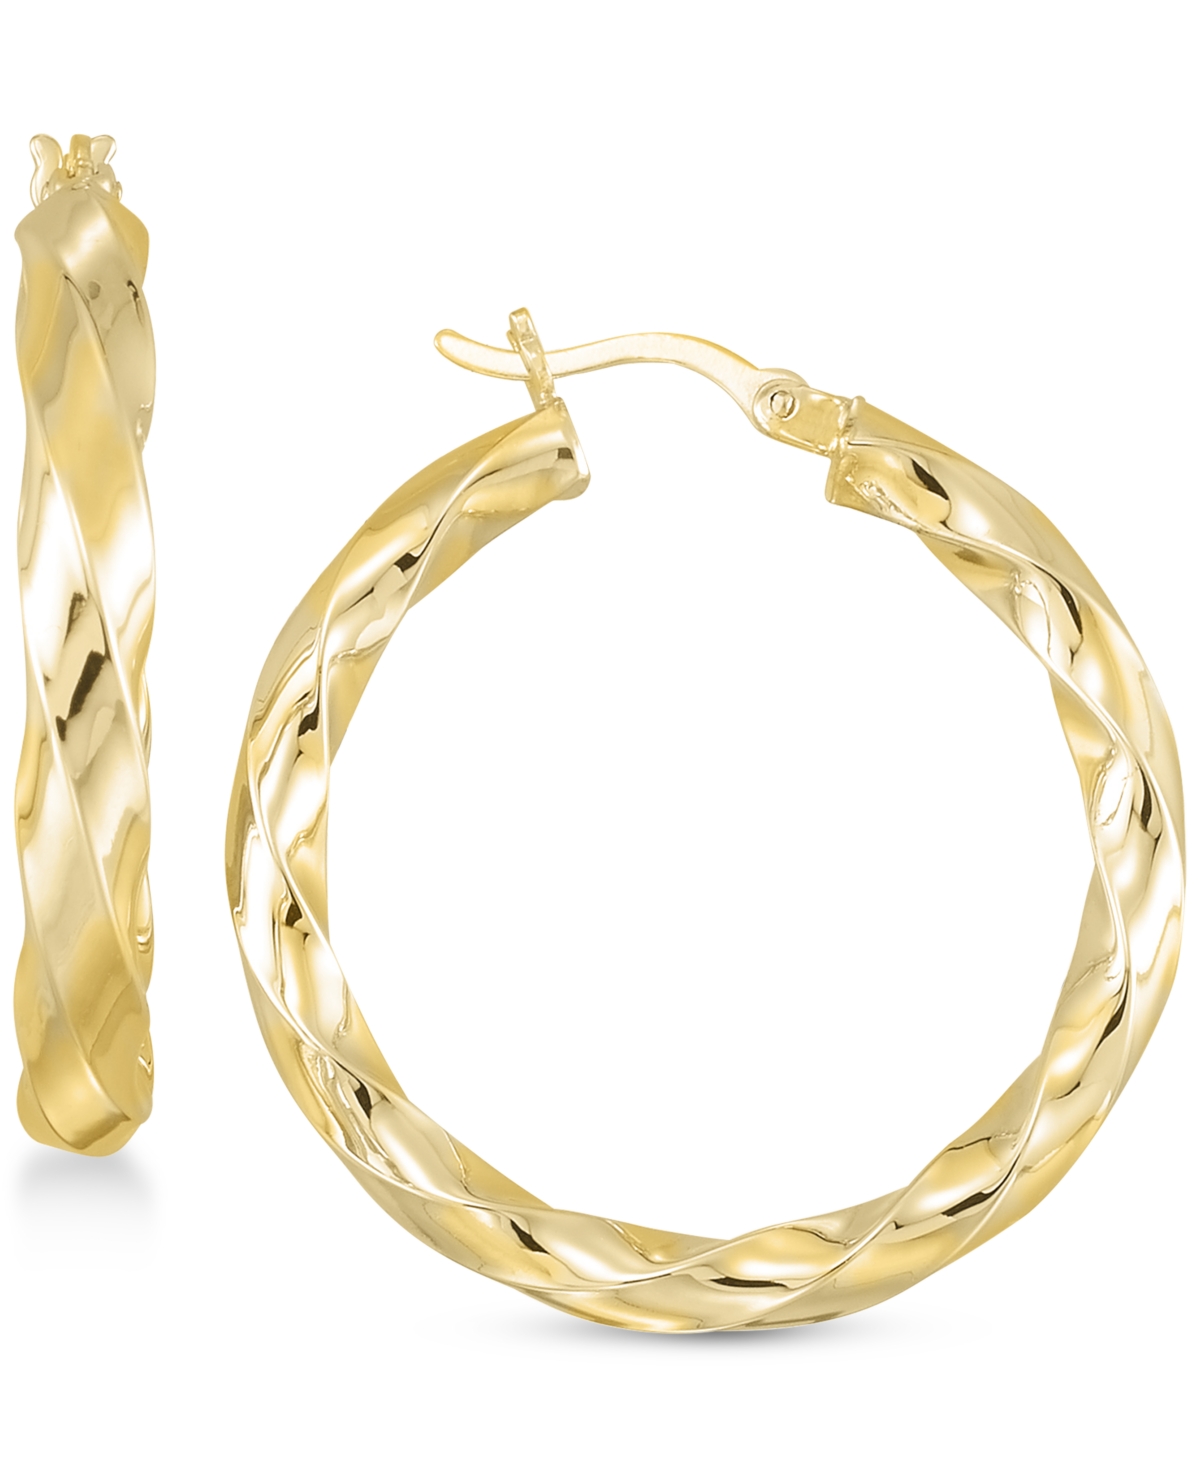 Textured Hoop Earrings in 18K Yellow Gold Over Silver or Sterling Silver - Gold over Silver